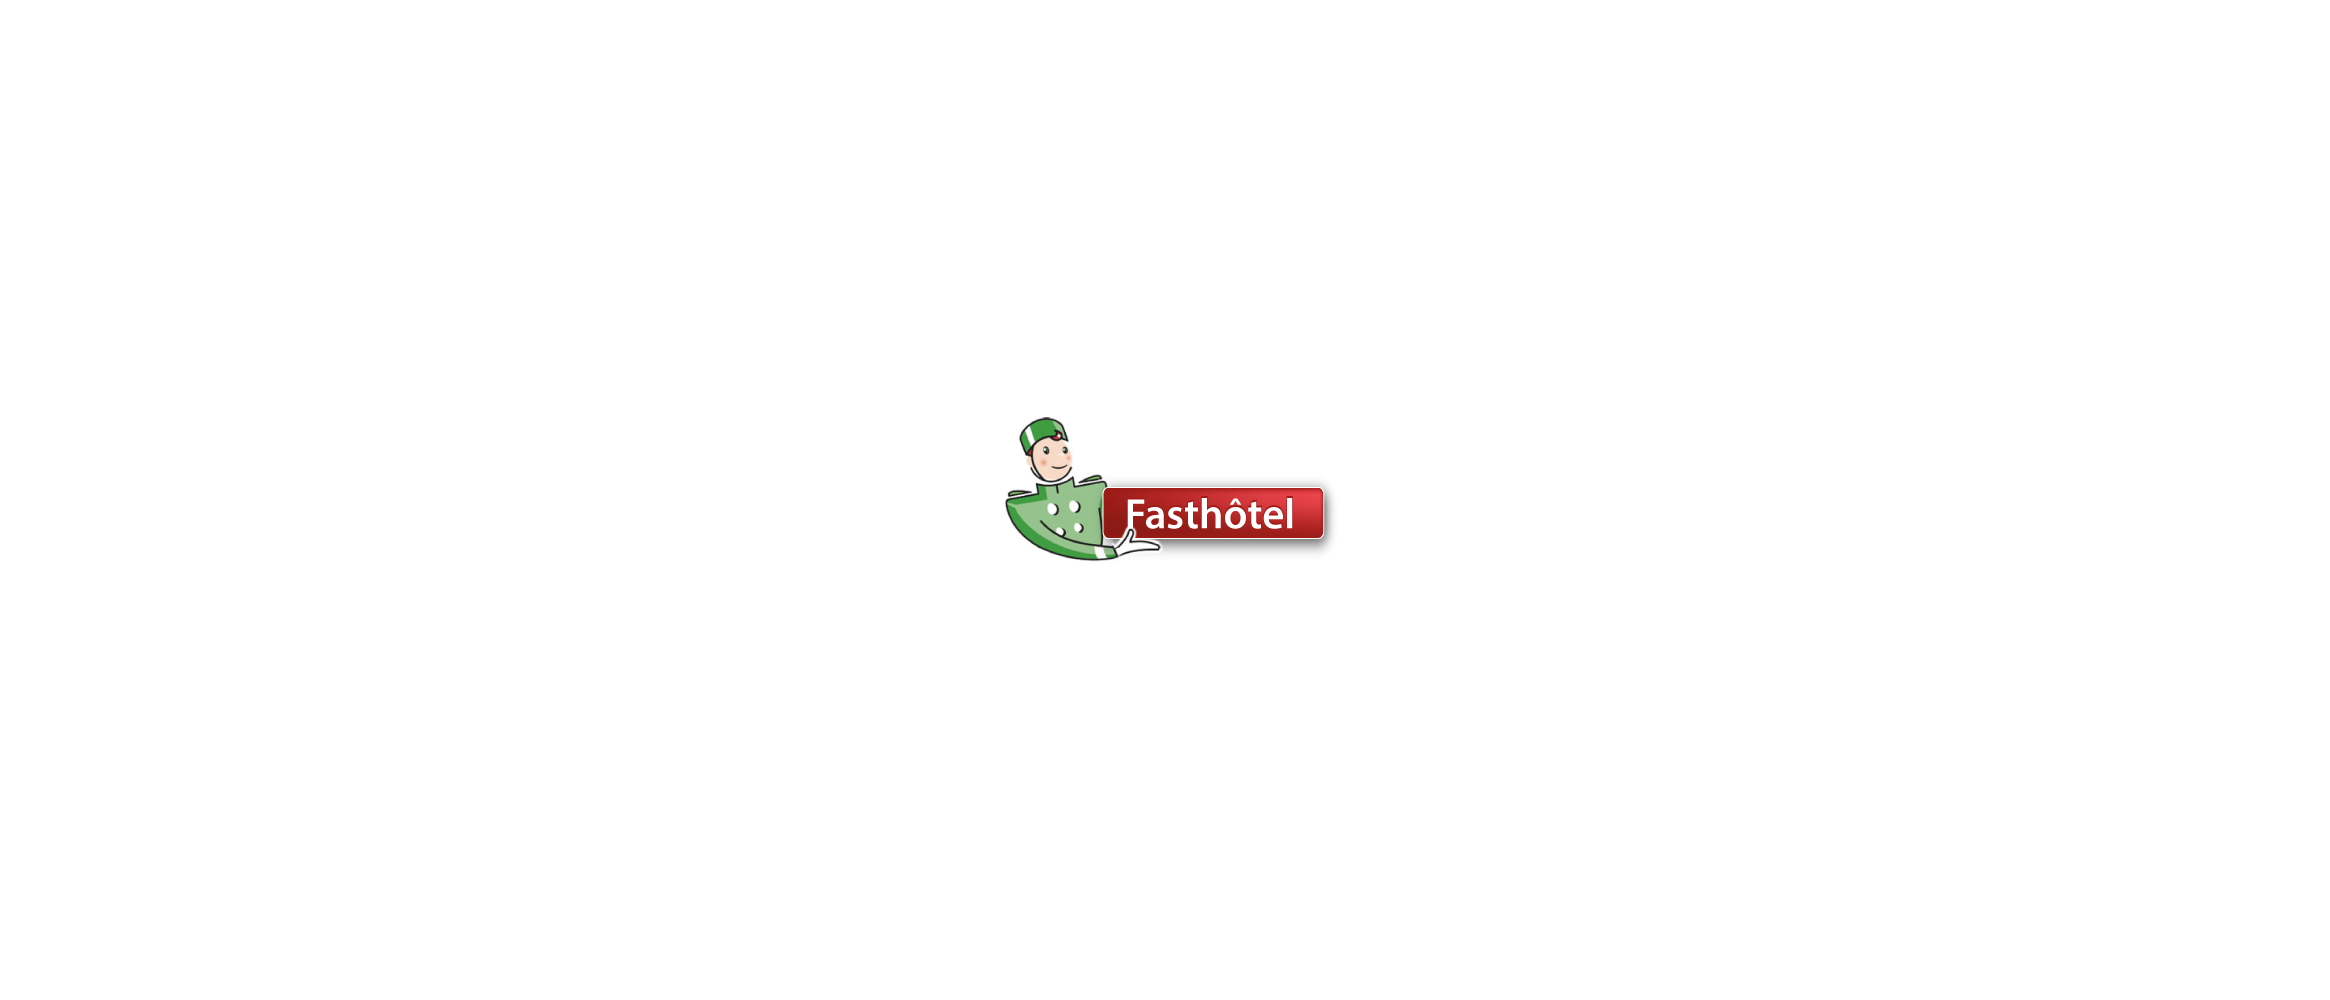 Fasthôtel.com